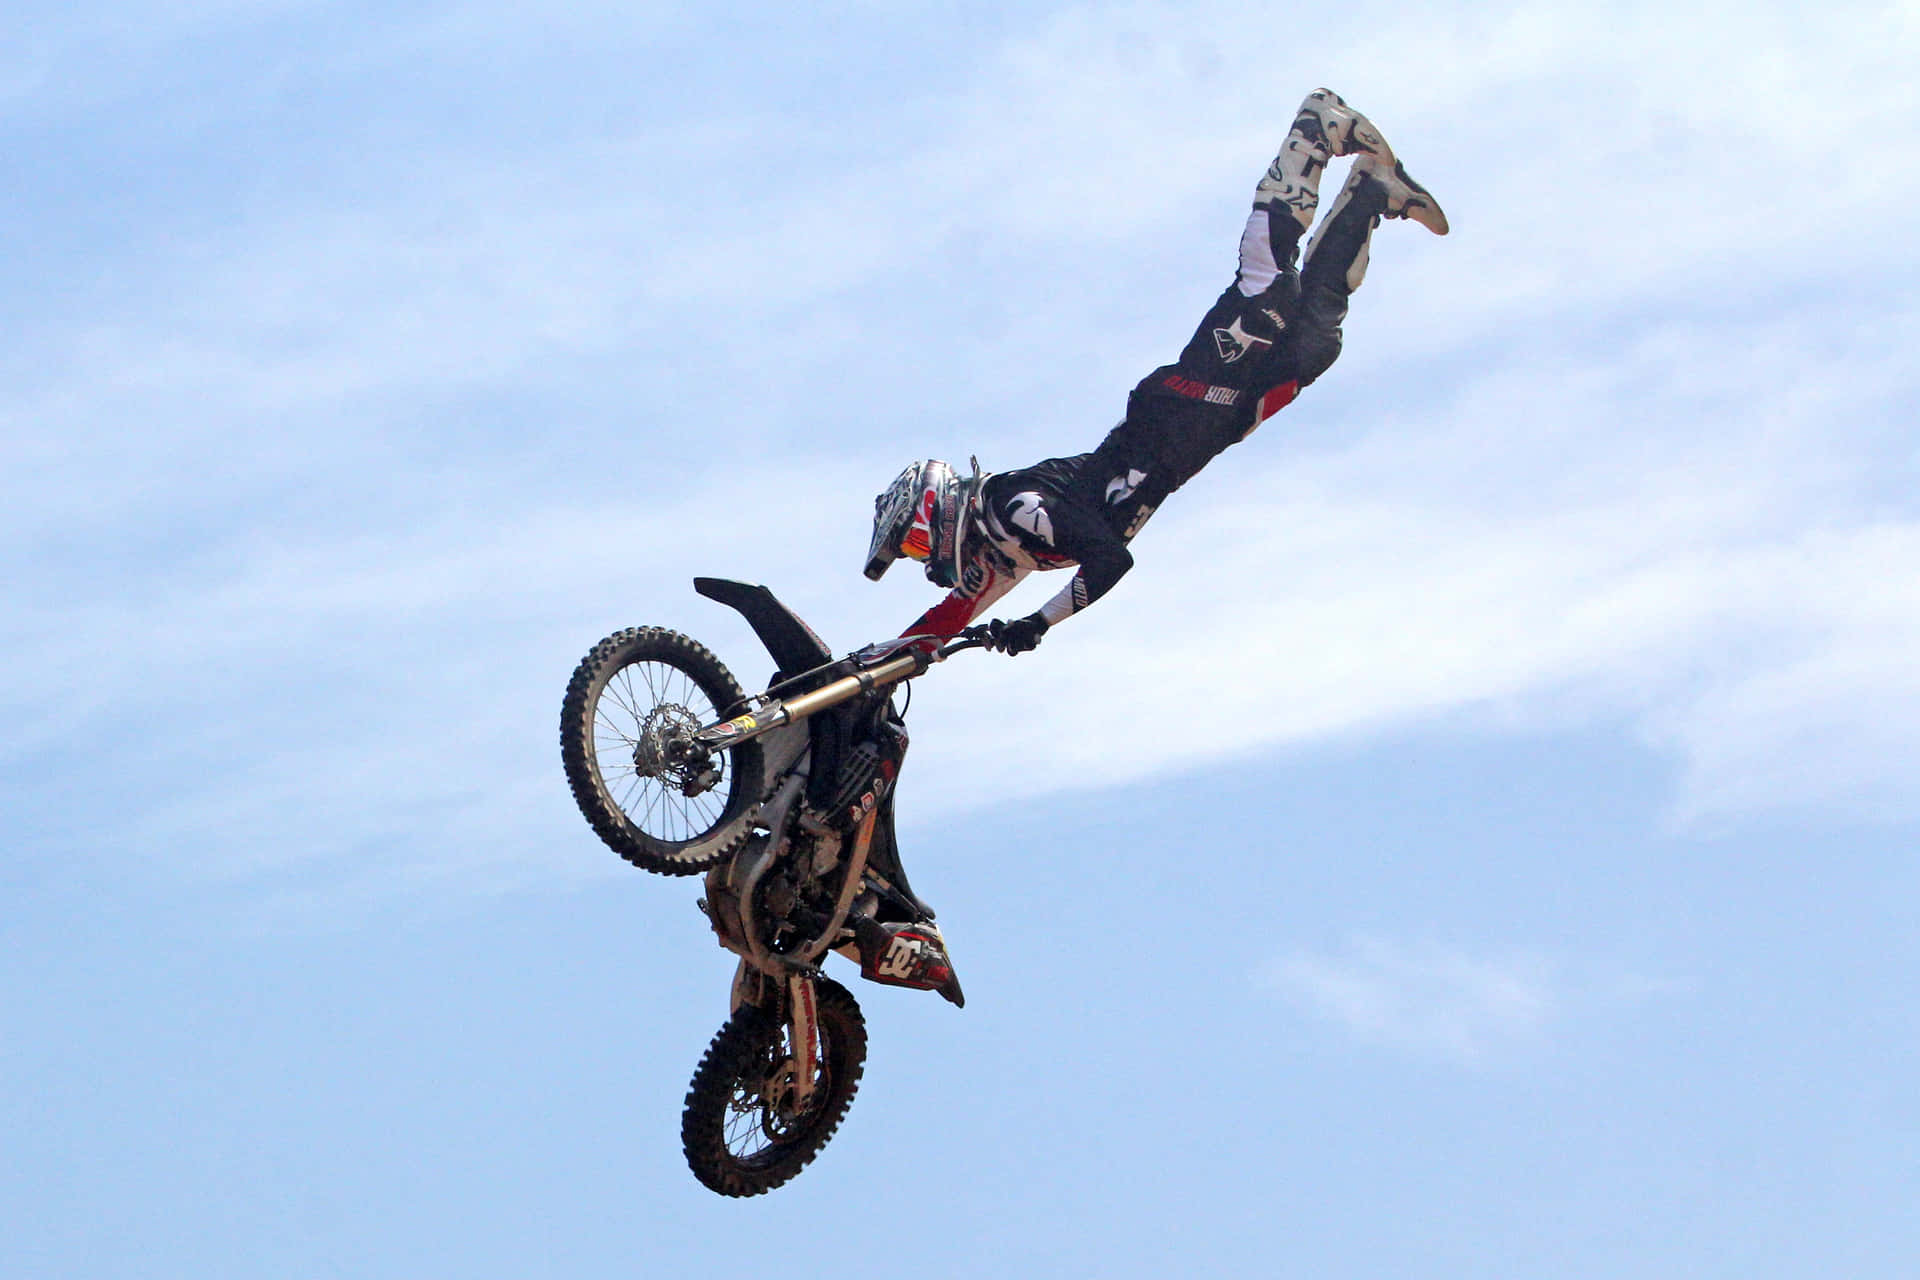 A motocross rider soaring through the air on his dirt bike